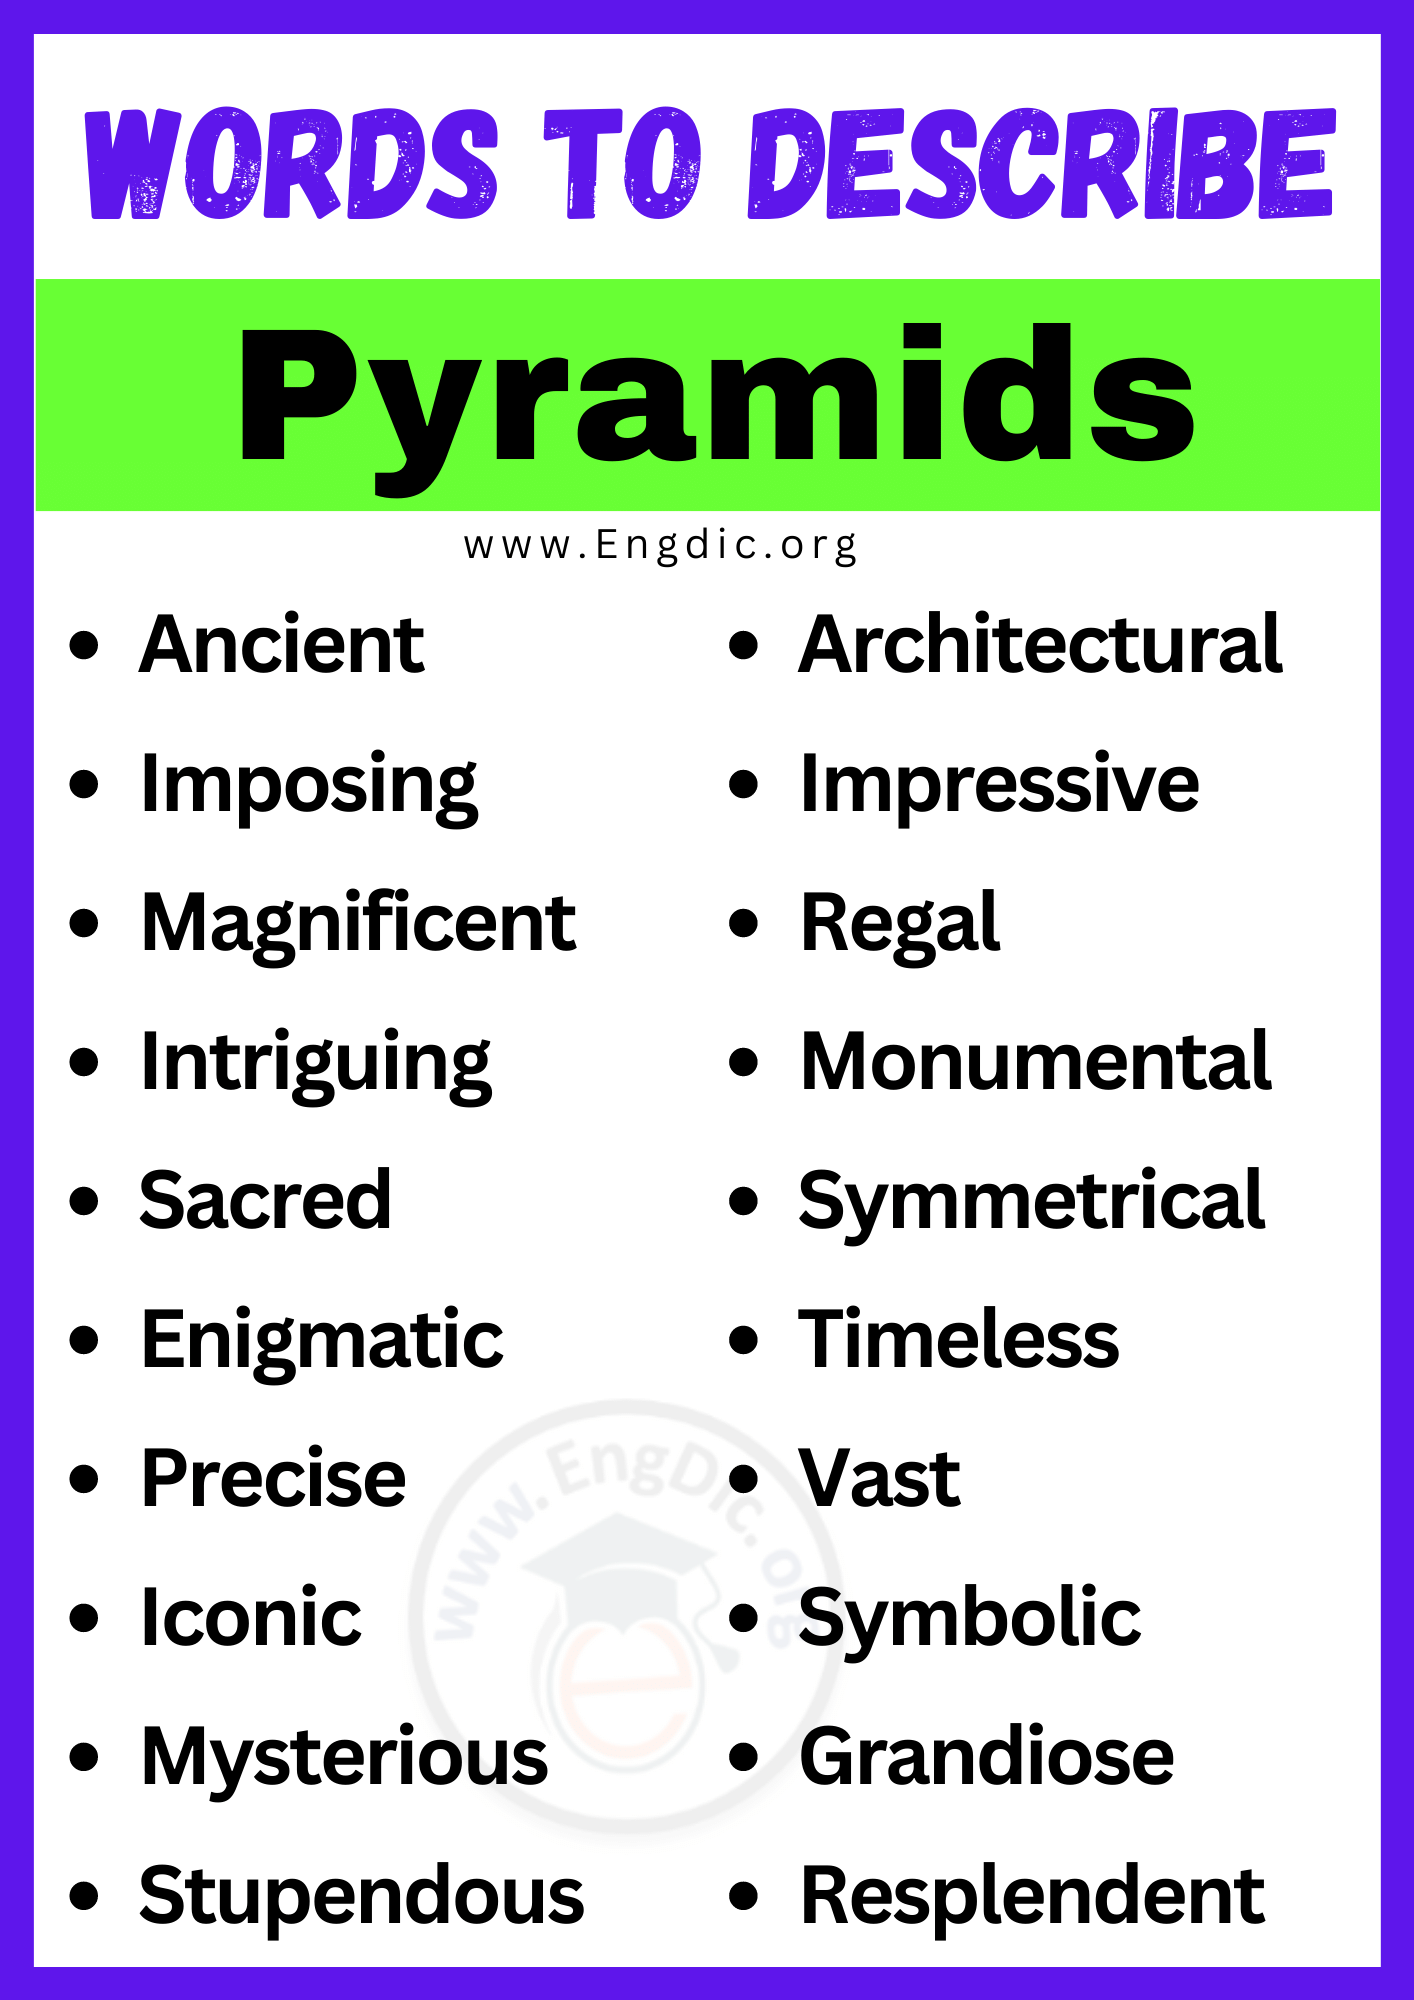 Words to Describe Pyramids